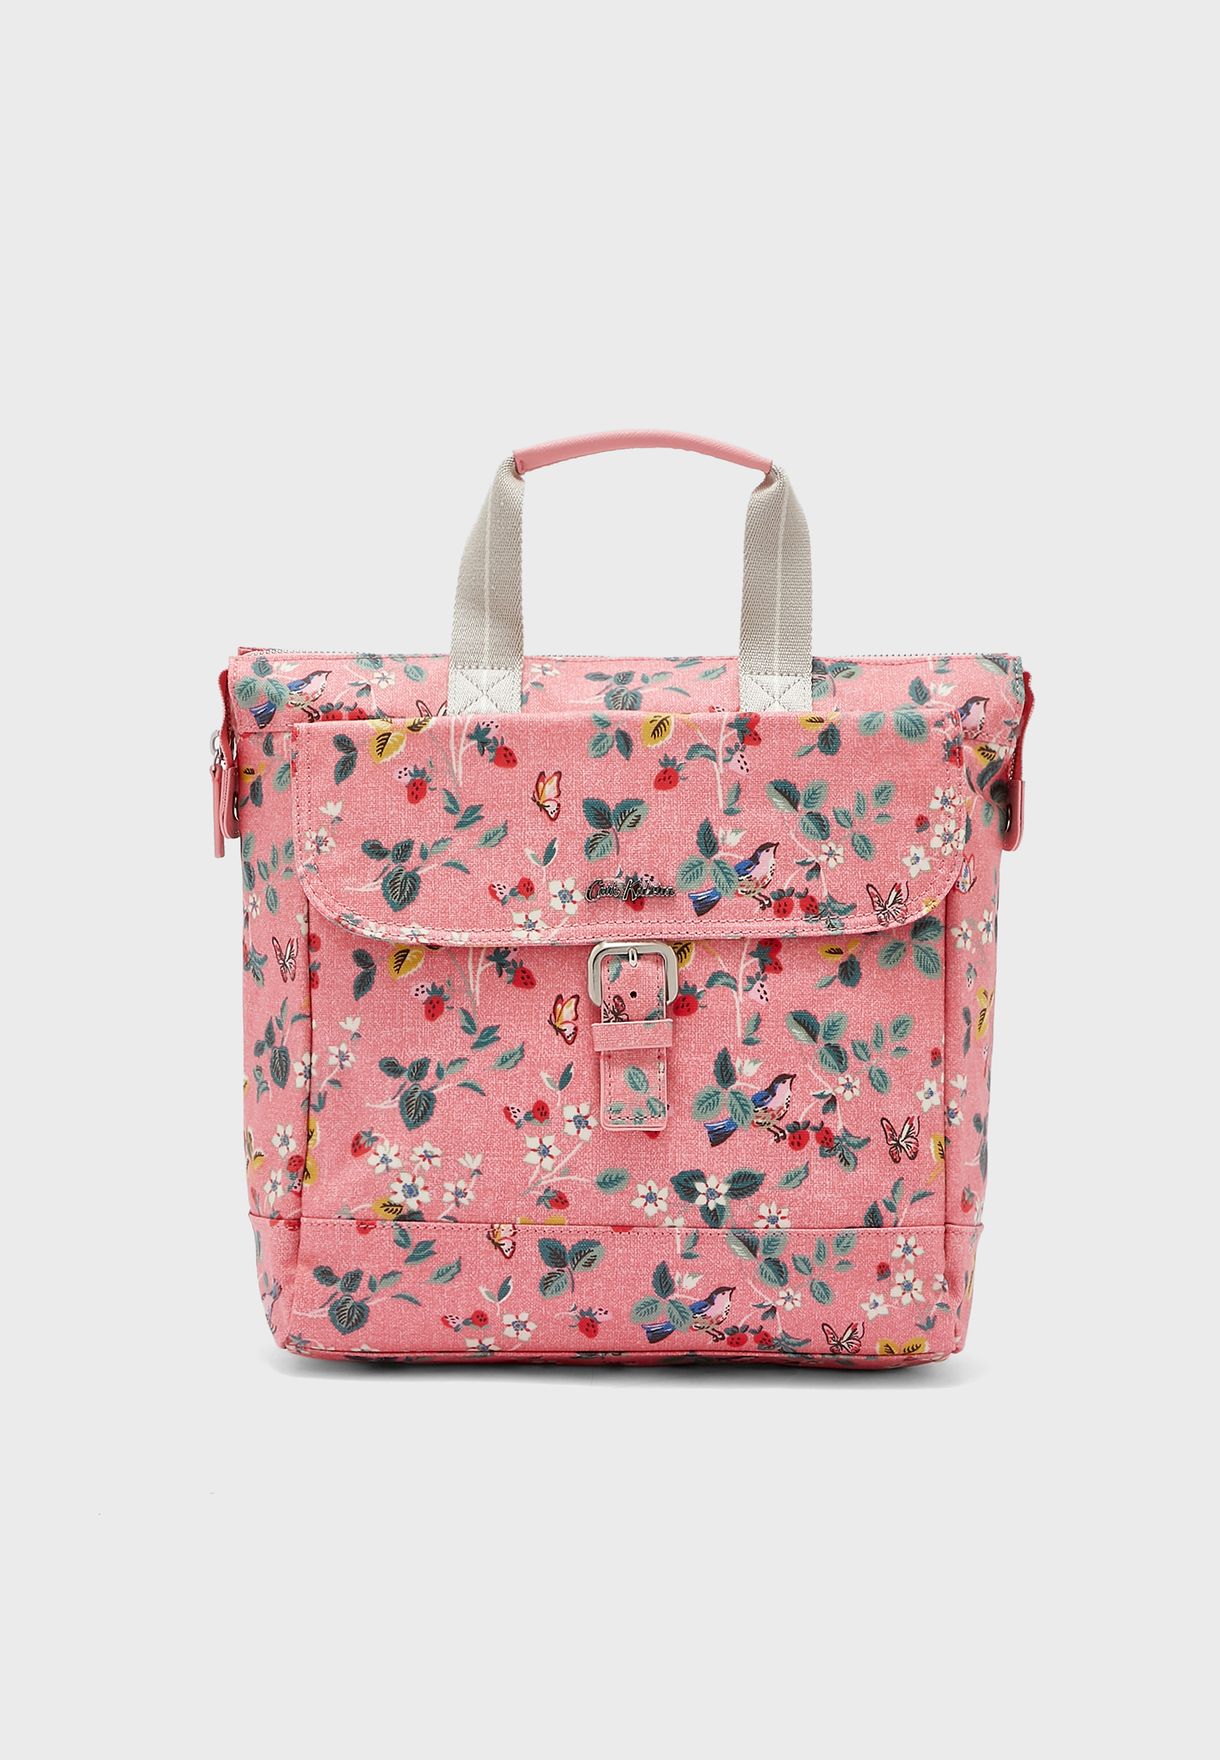 cath kidston floral bag